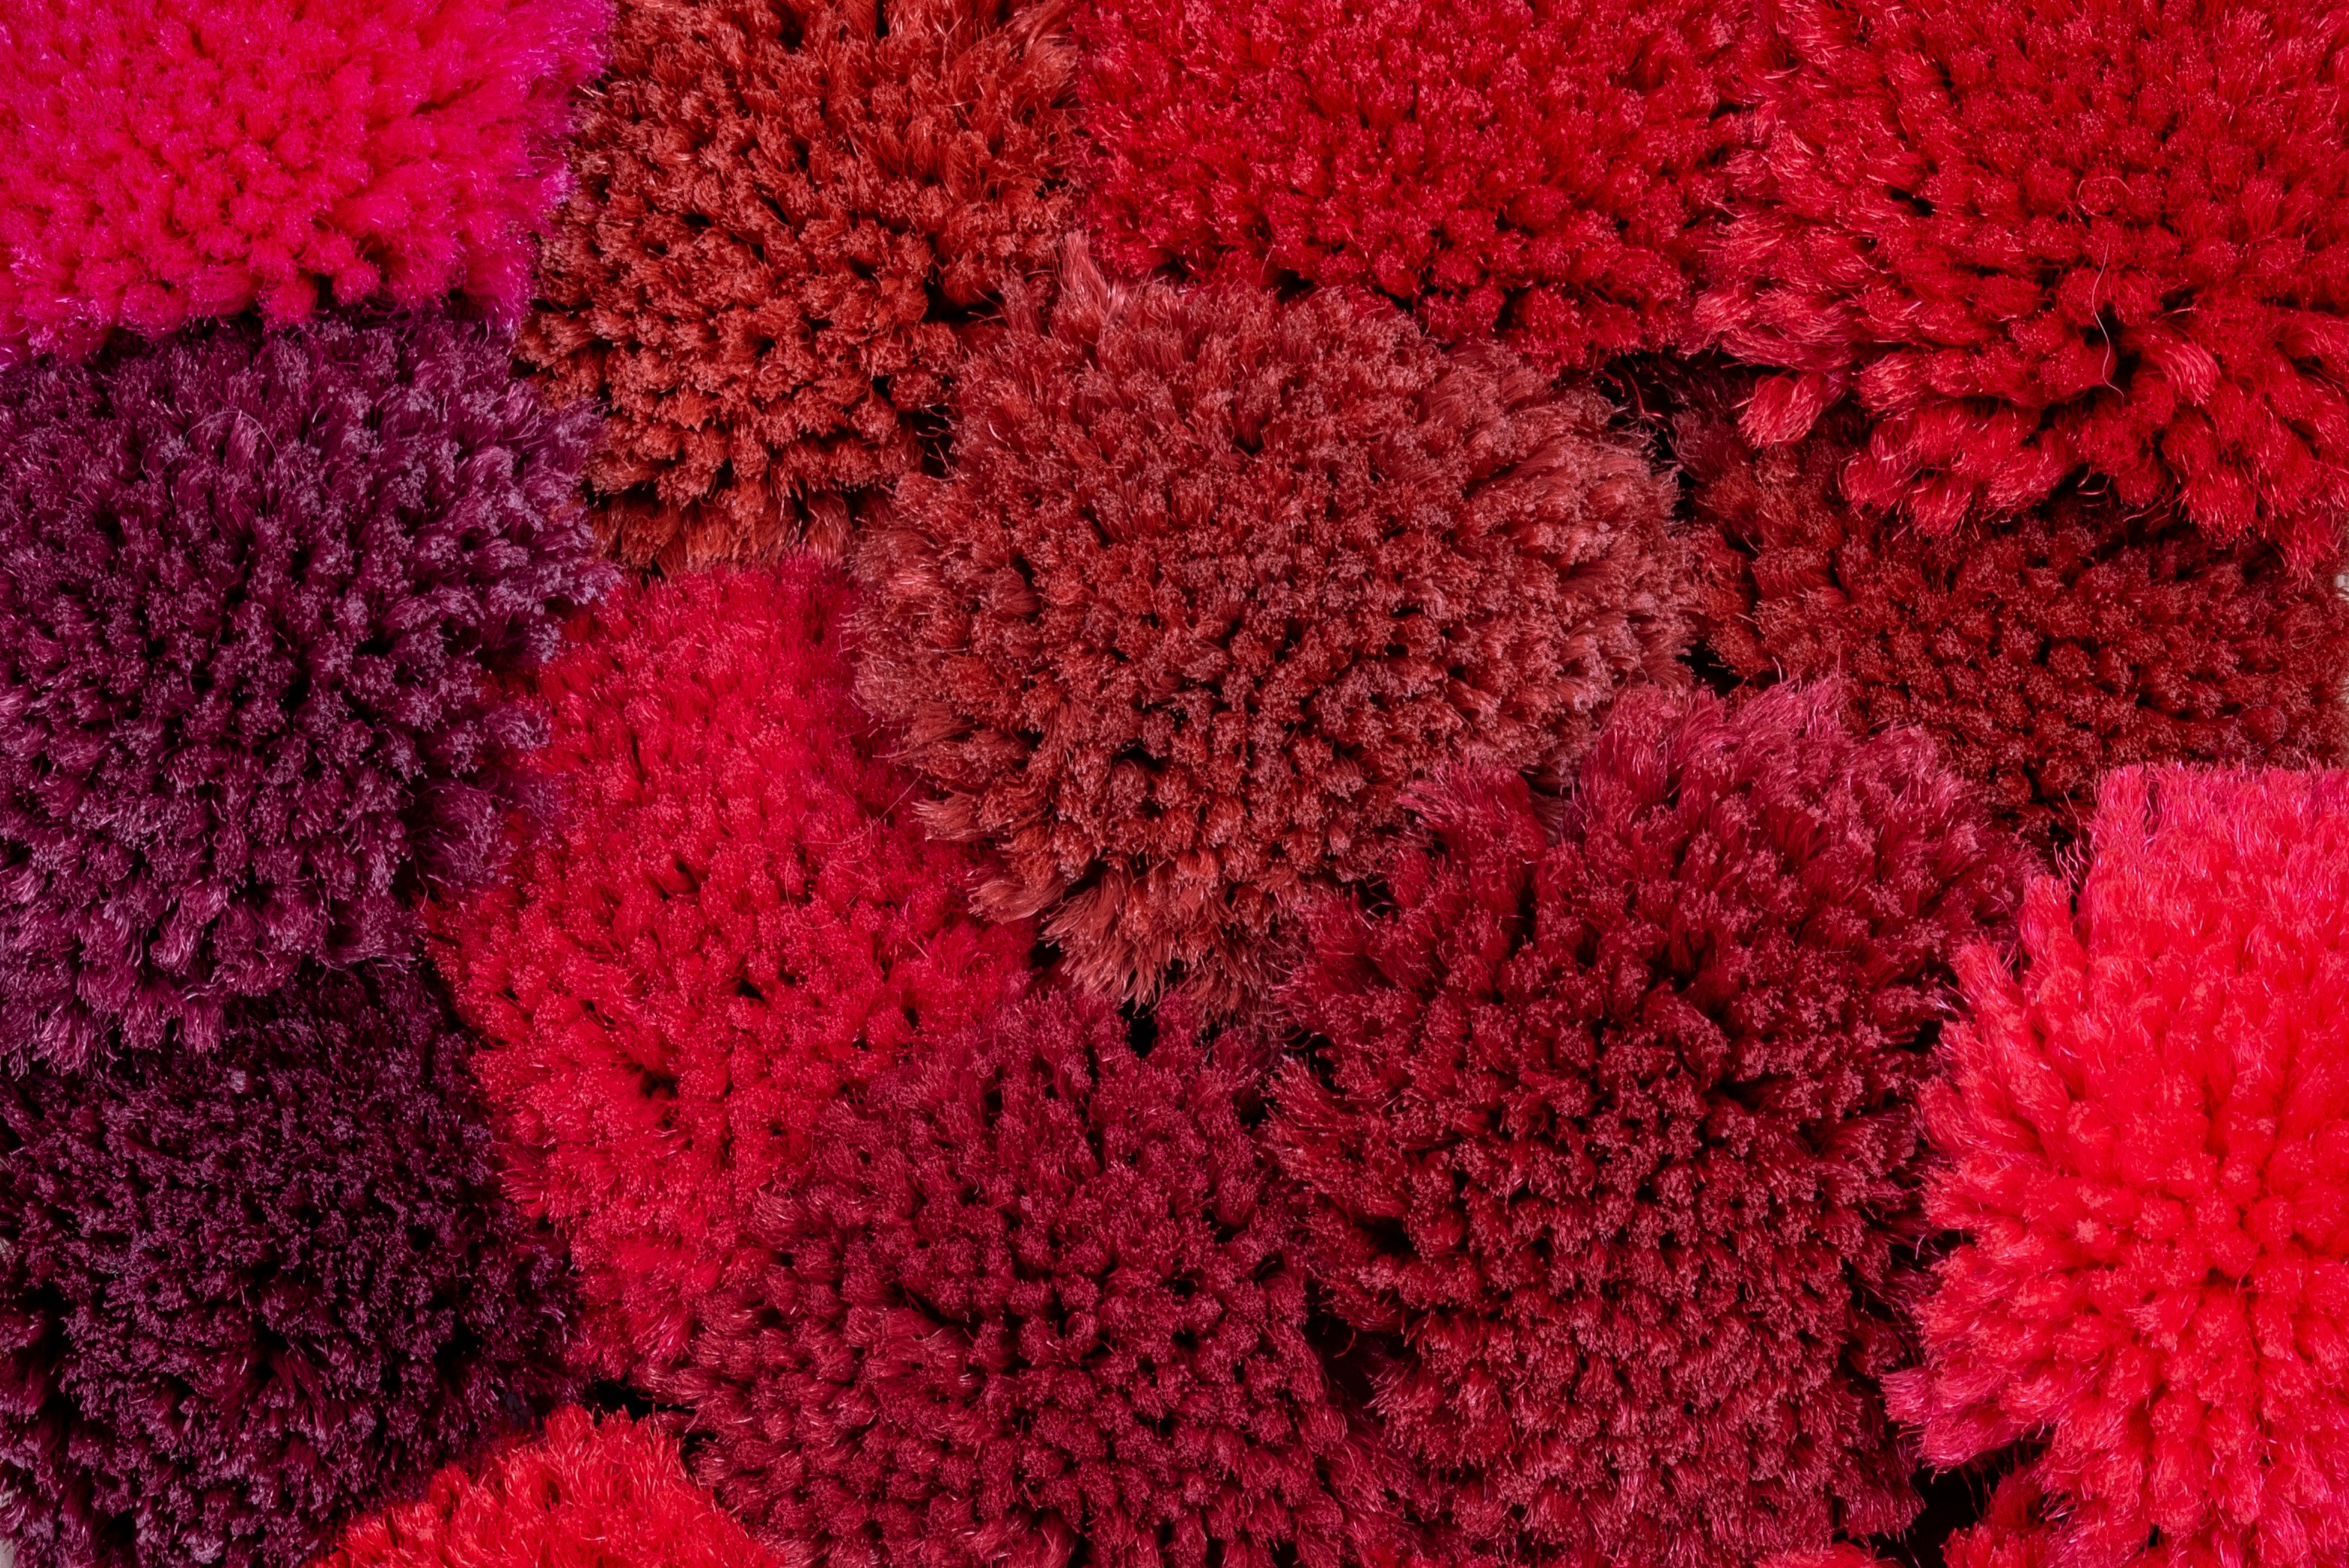 Universal Color variation of red poms